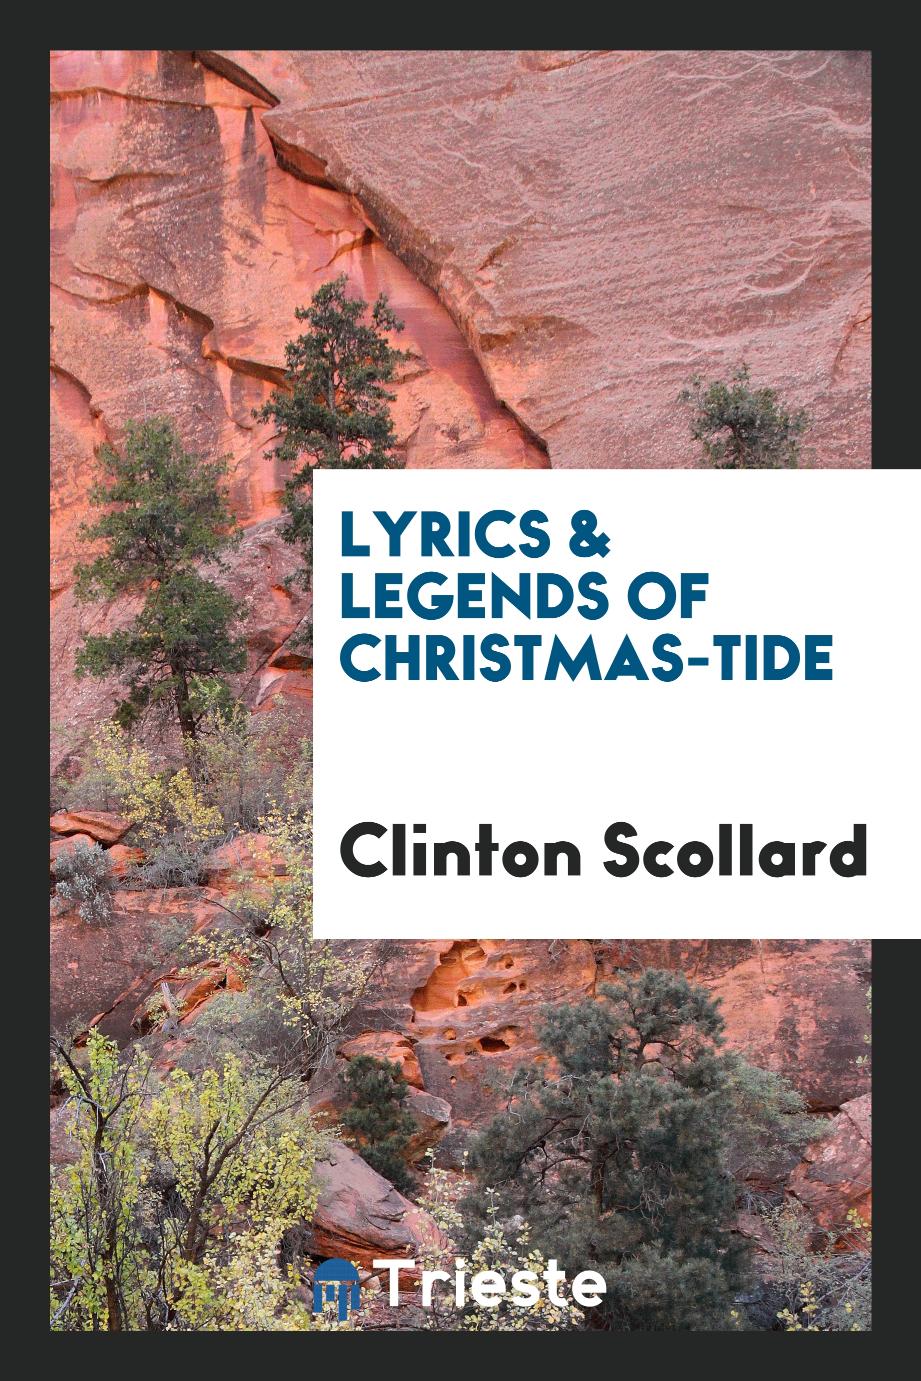 Lyrics & Legends of Christmas-tide